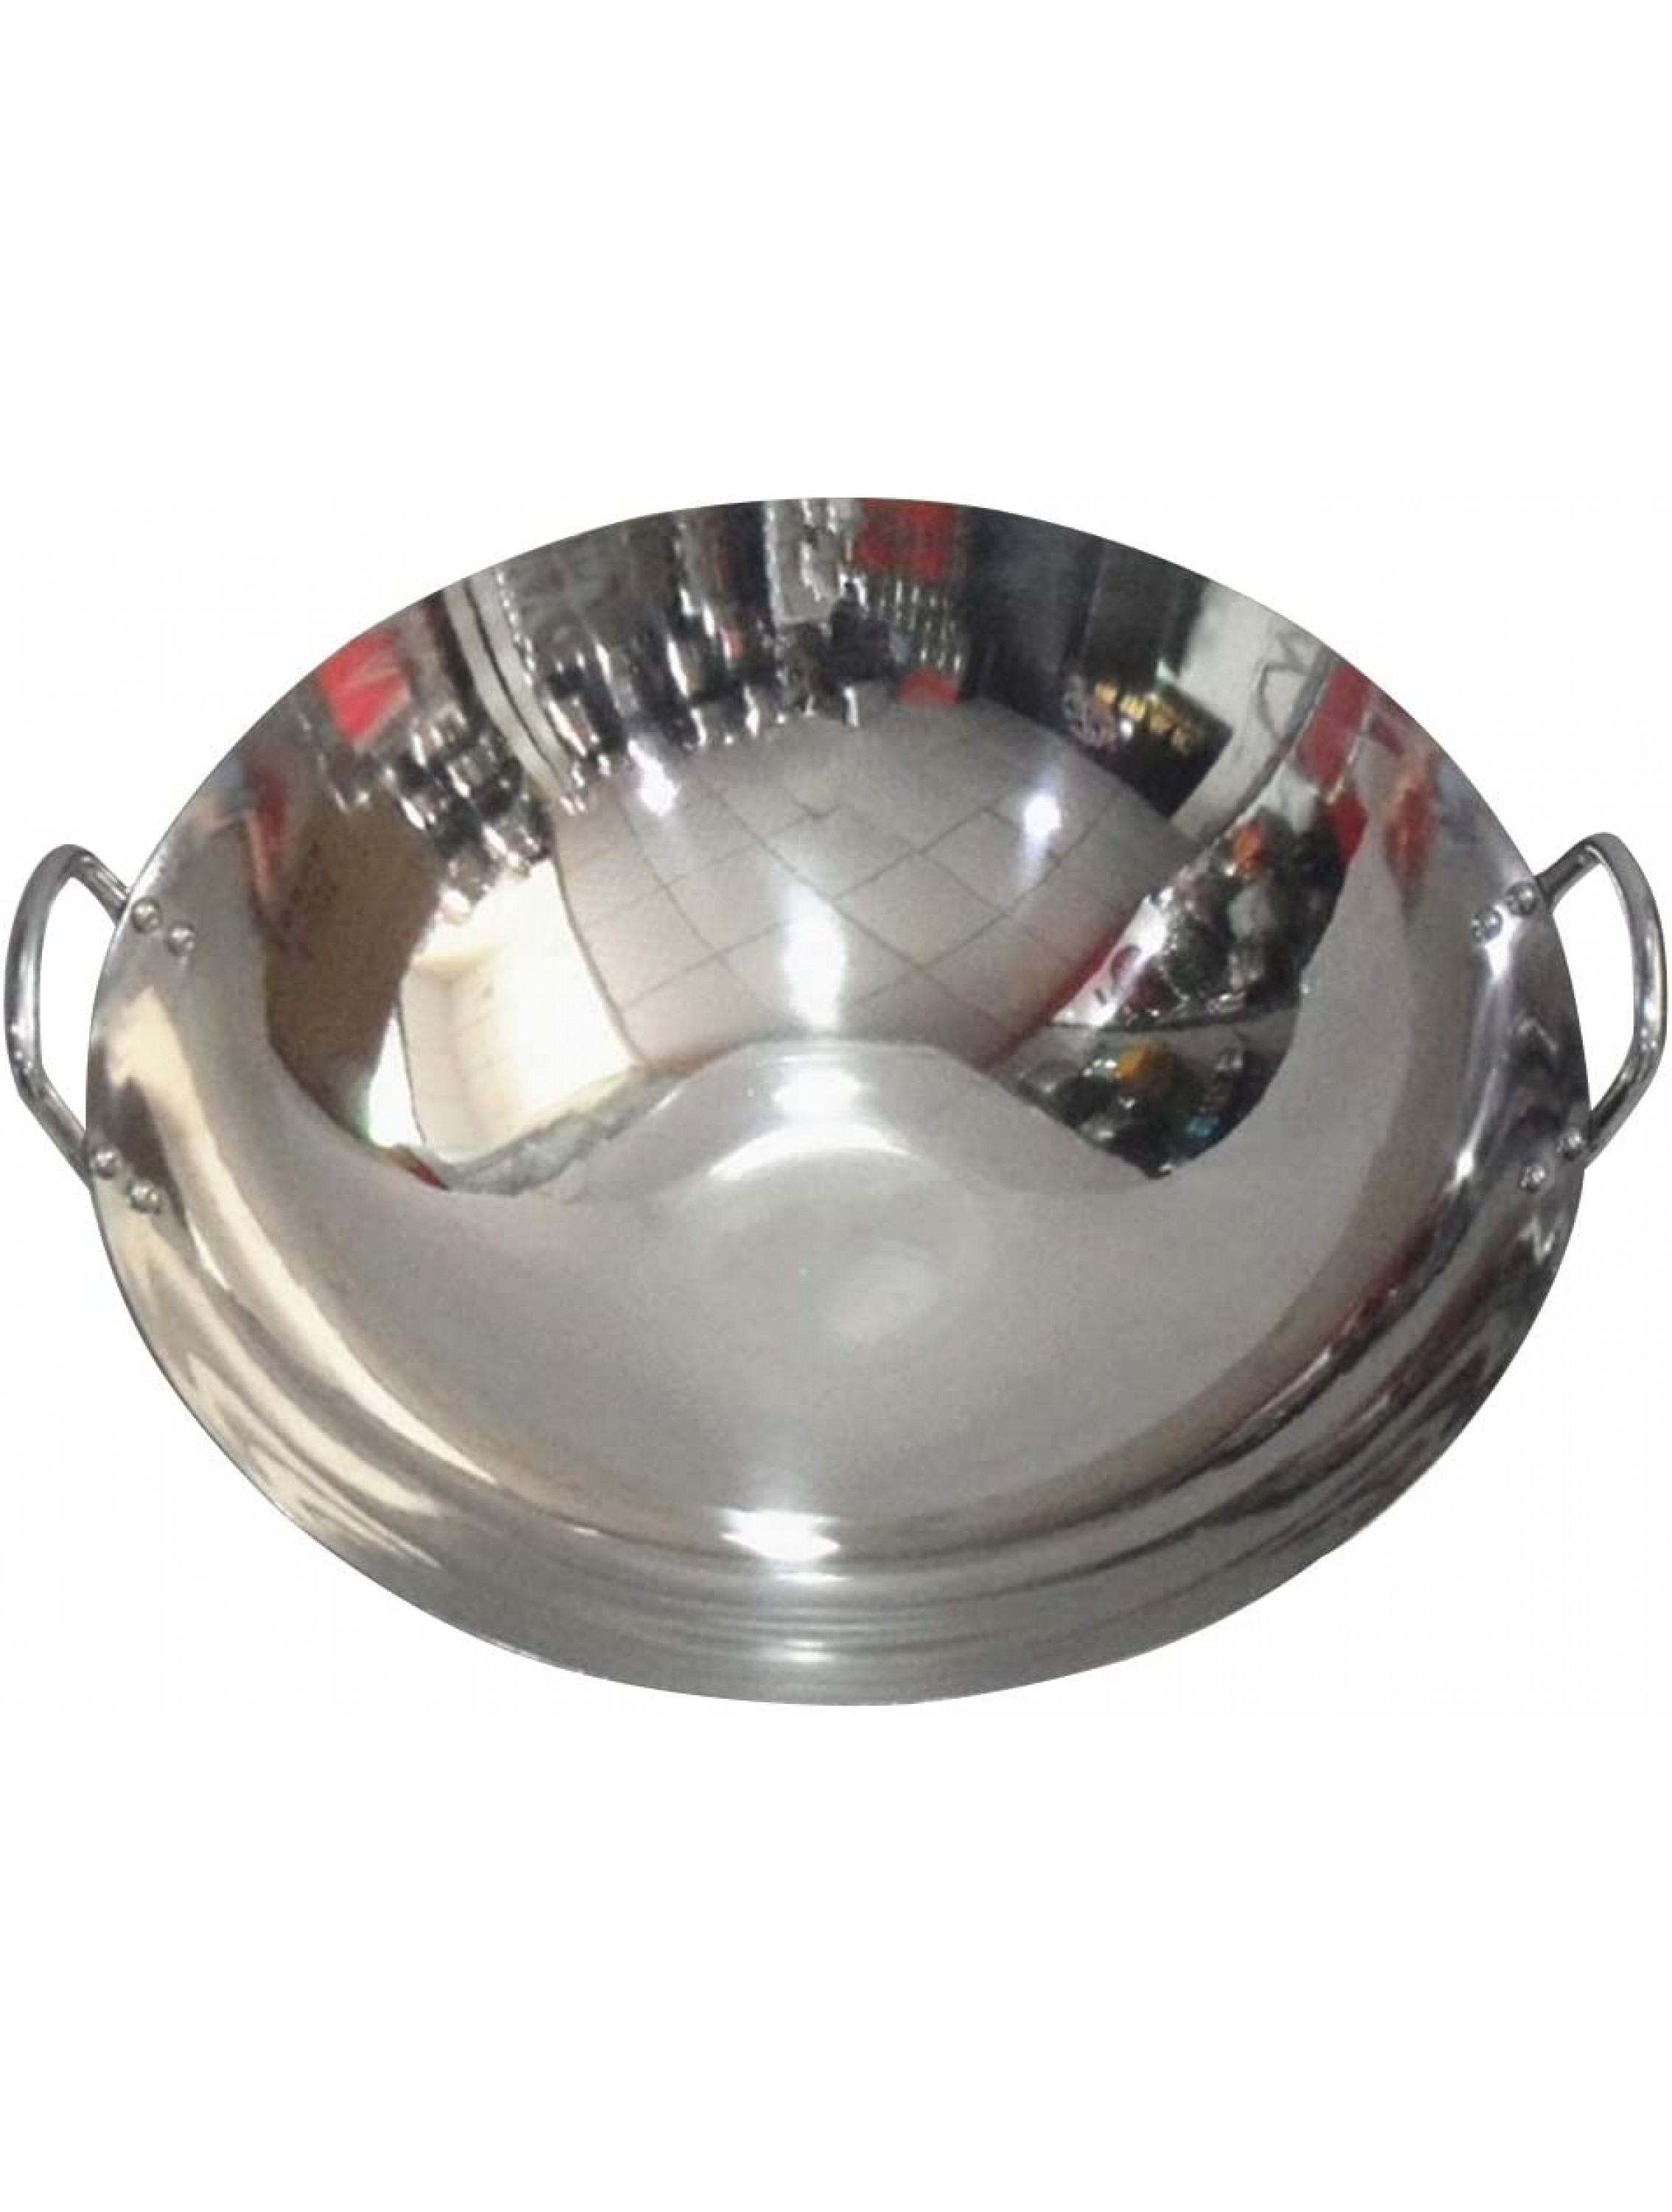 XMcKJ Stainless Steel Wok Stir-Fry Pan with Helper Handle and Lid Multipurpose Stainless Steel Saute Pan,26cm - BPNK15E24